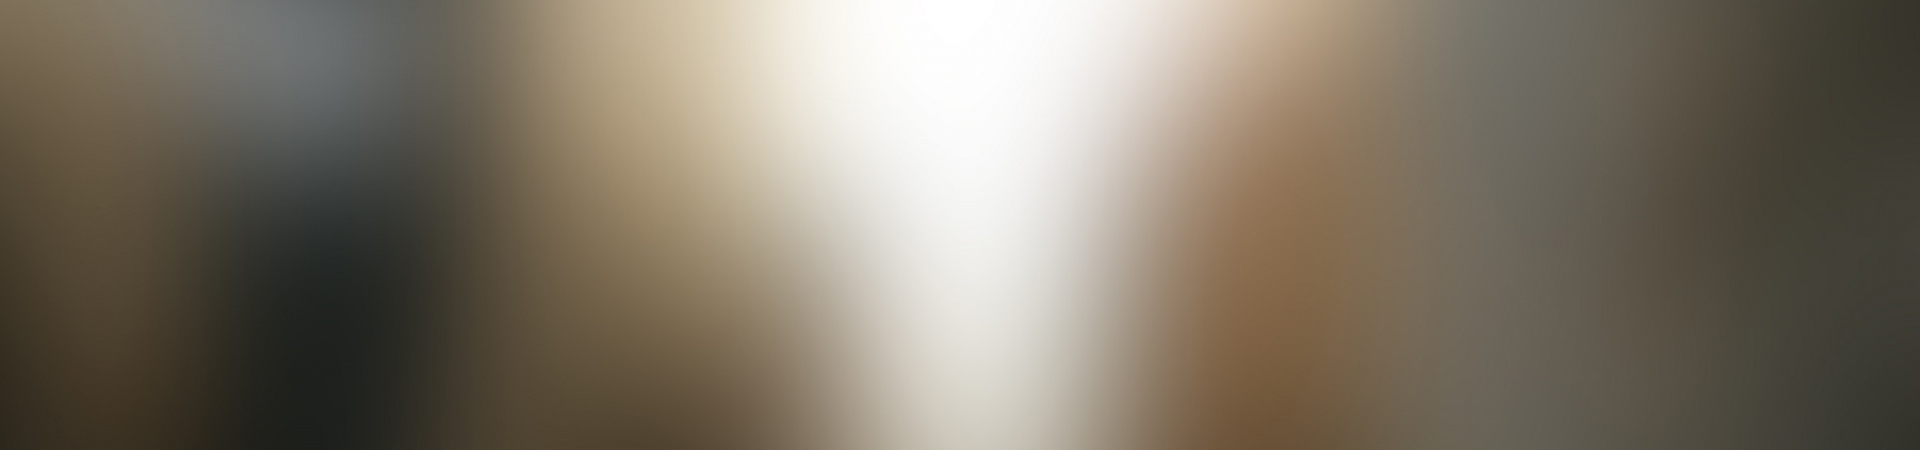 blurry_background_i-wallpaper-1920x1080